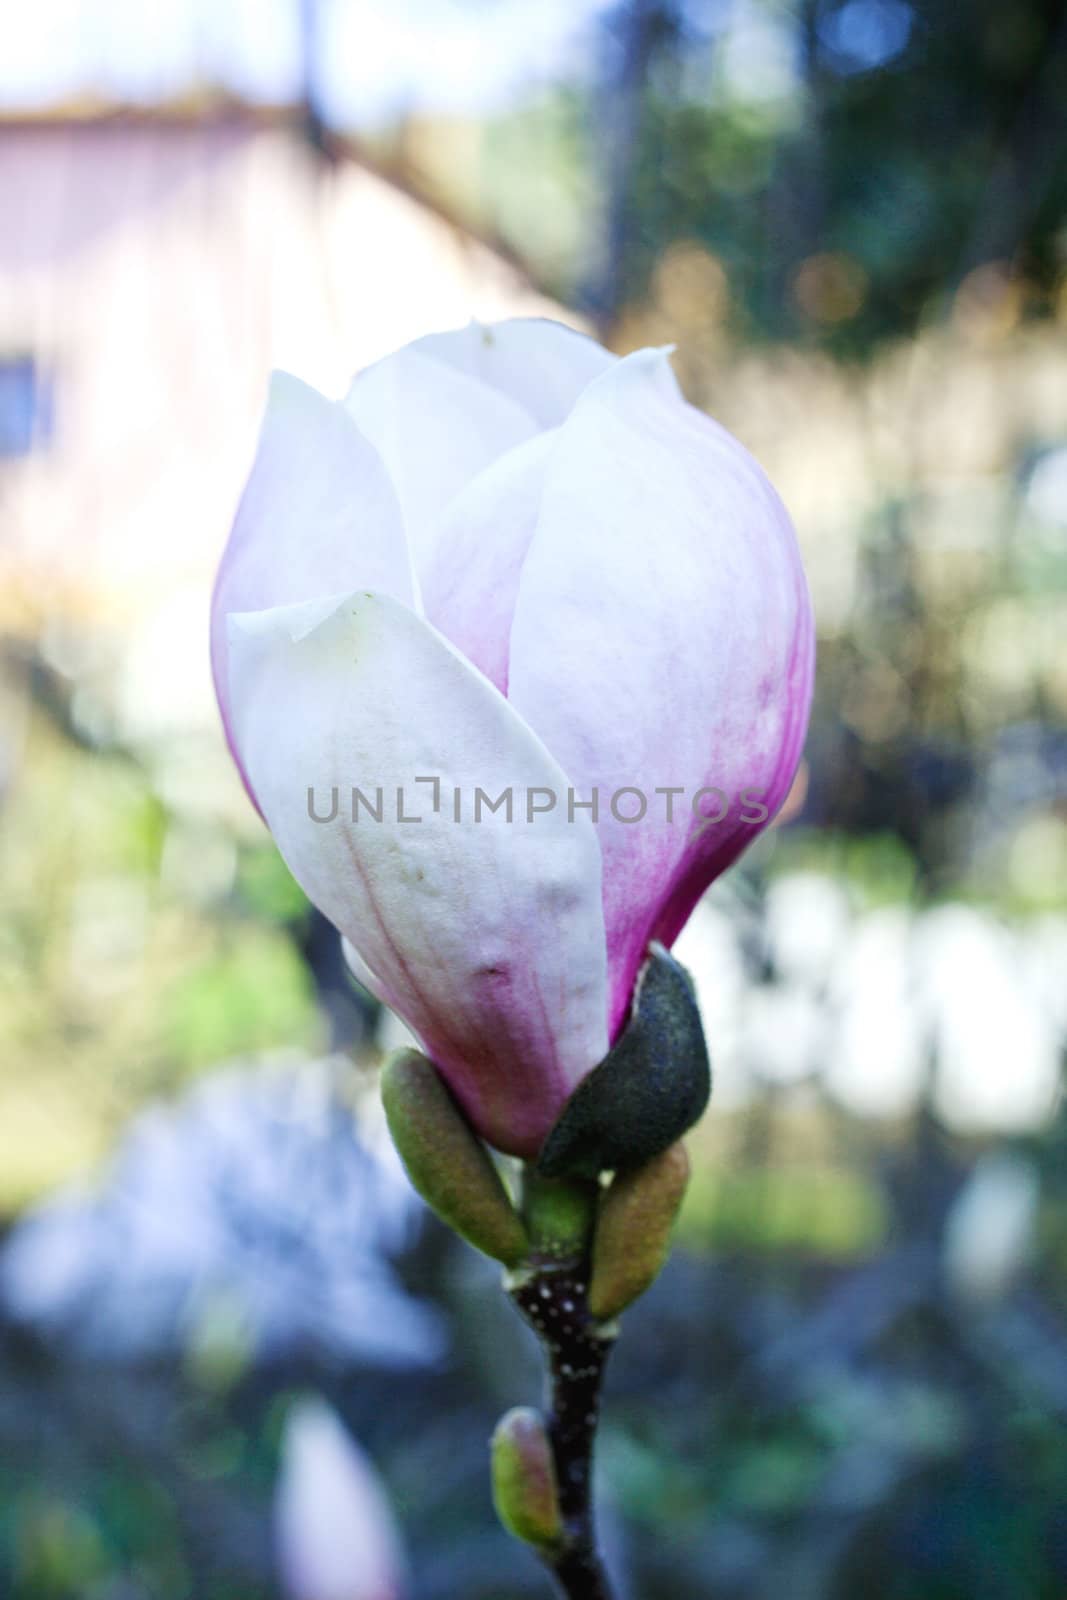 White magnolia by bepsimage